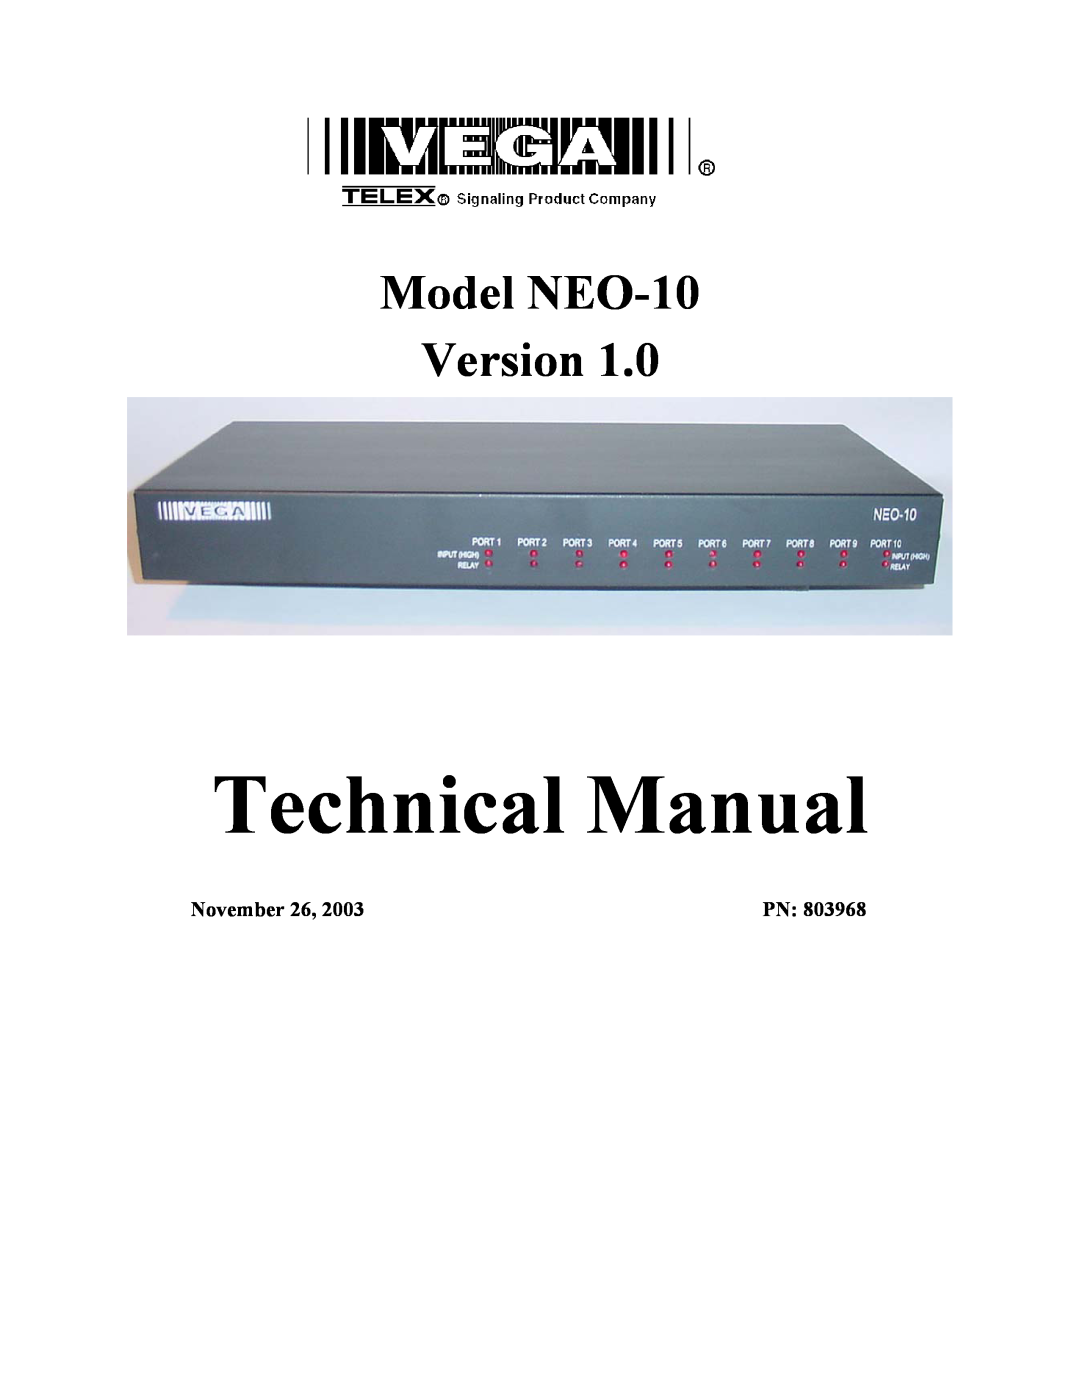 Telex technical manual November, Technical Manual, Model NEO-10 Version 